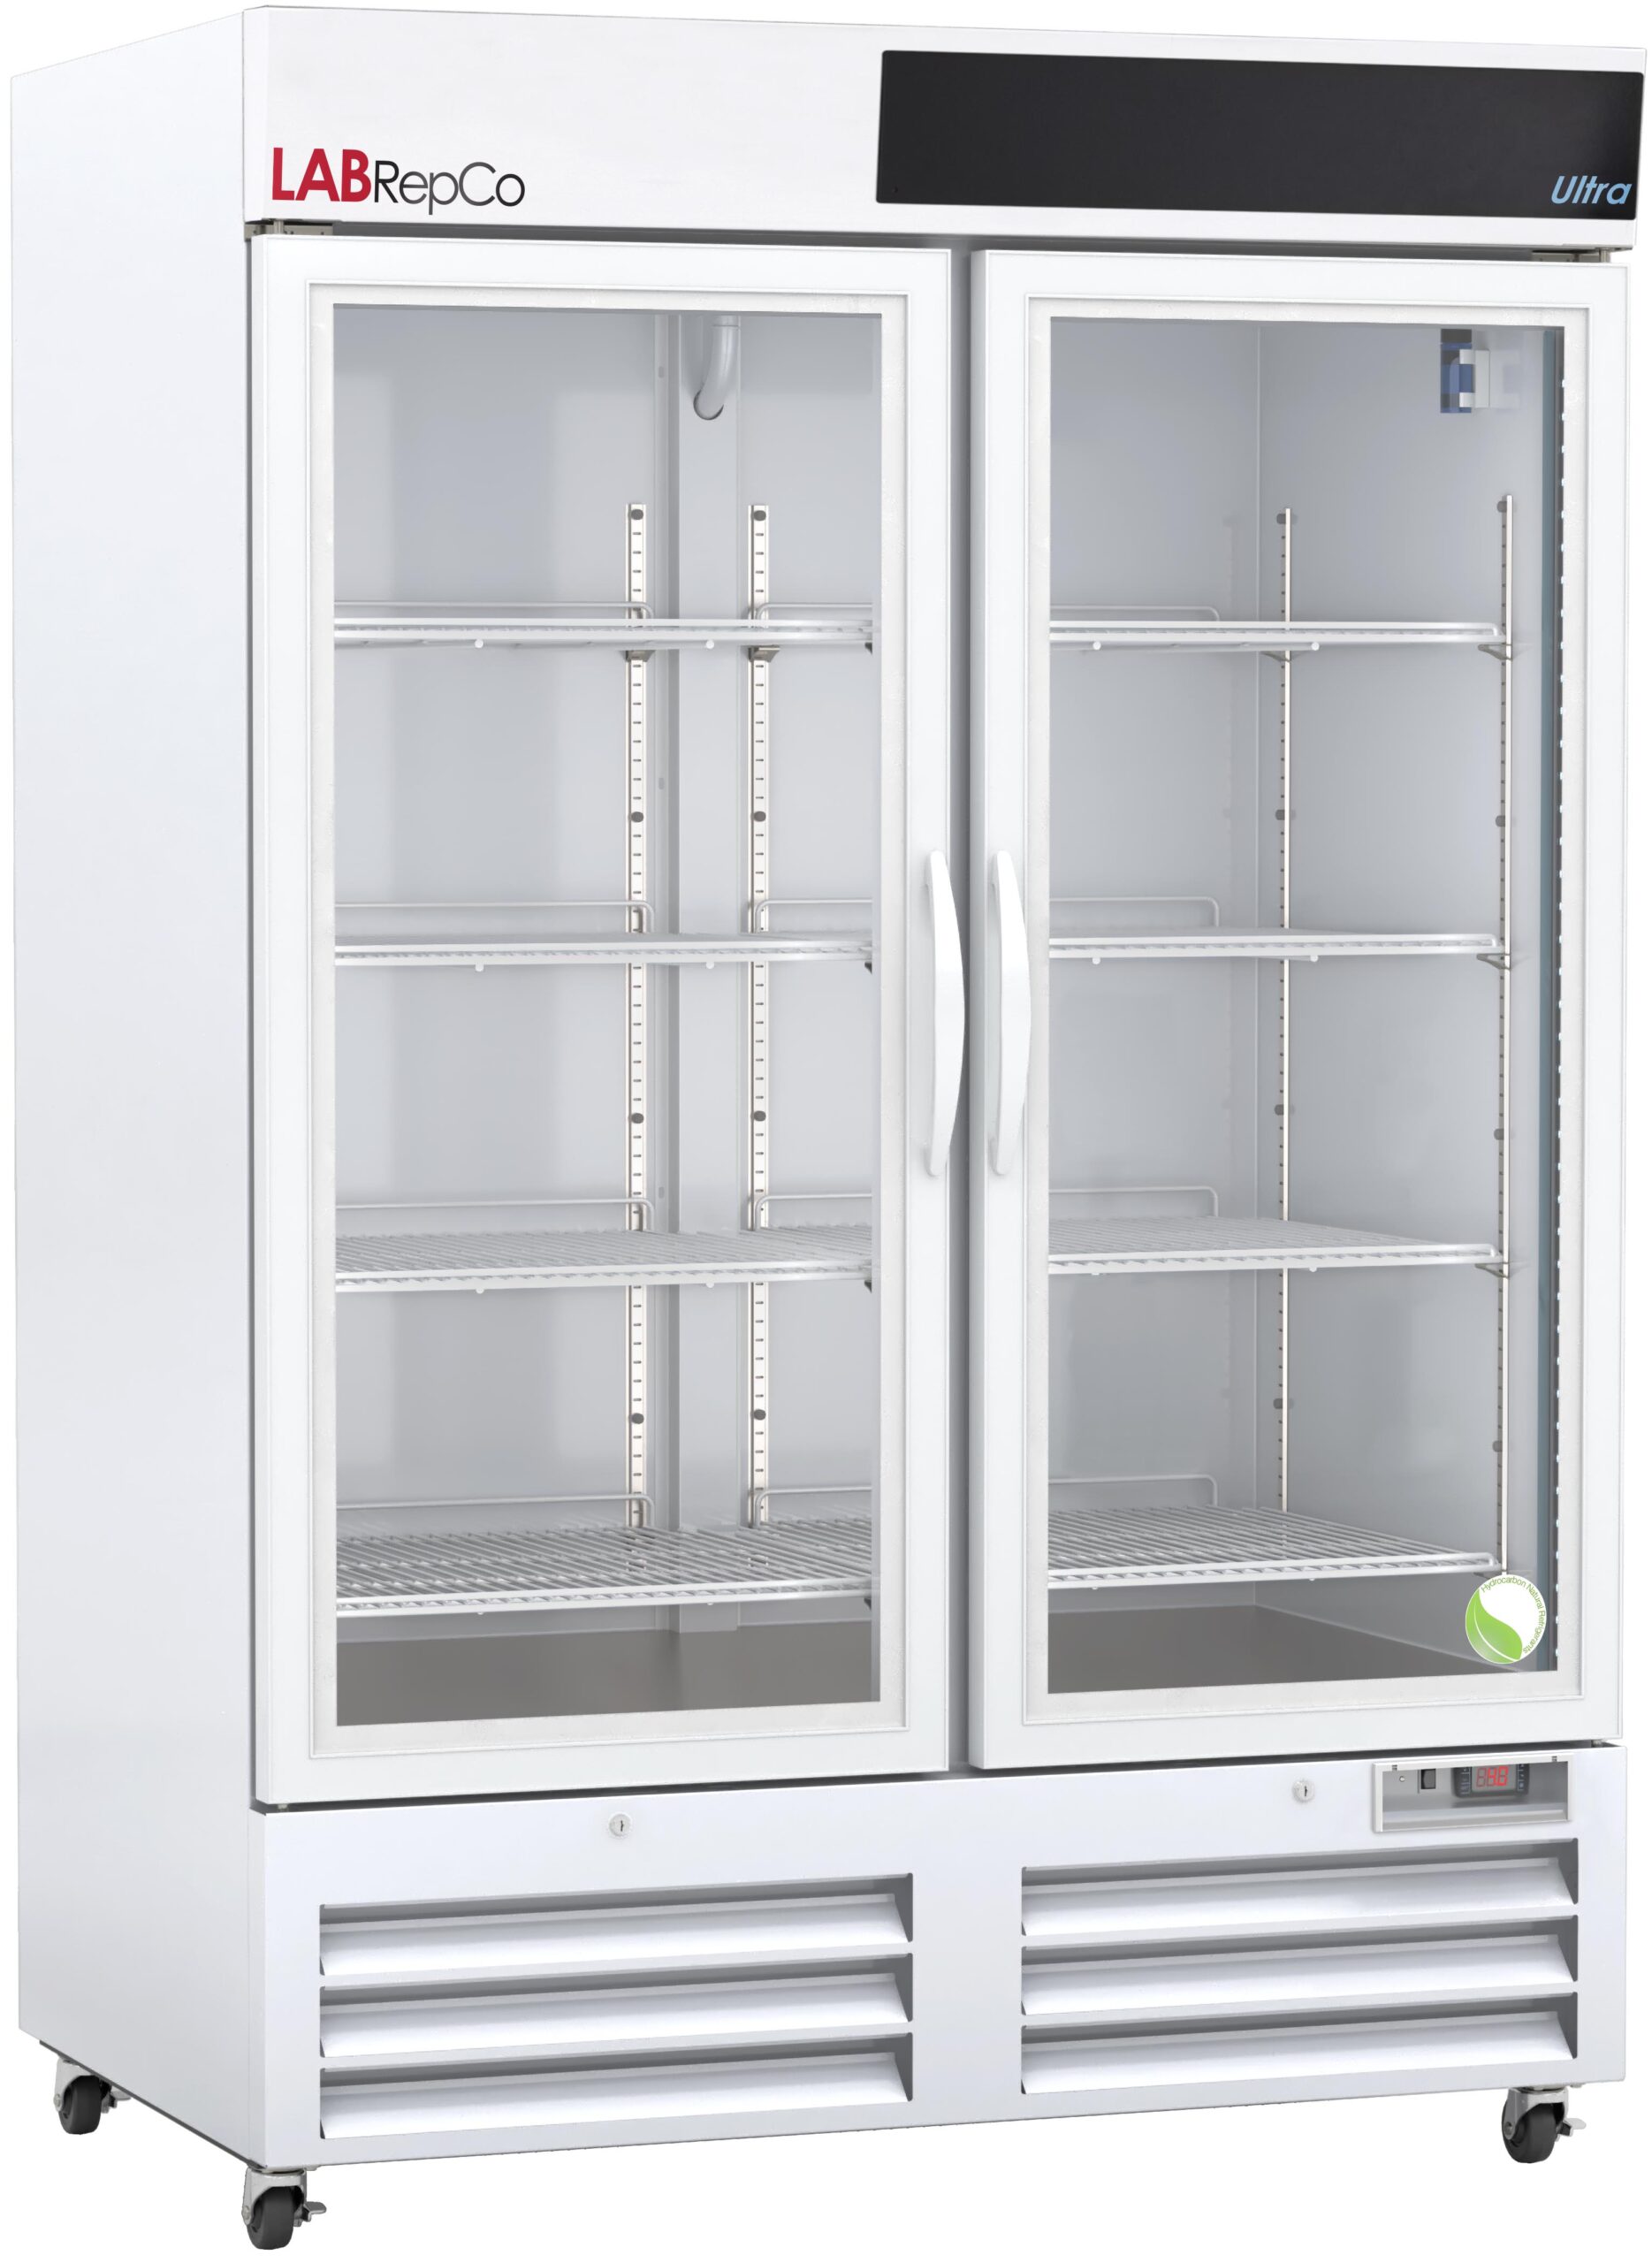 Control Company 4239 Traceable® Hi-Accuracy Refrigerator/Freezer